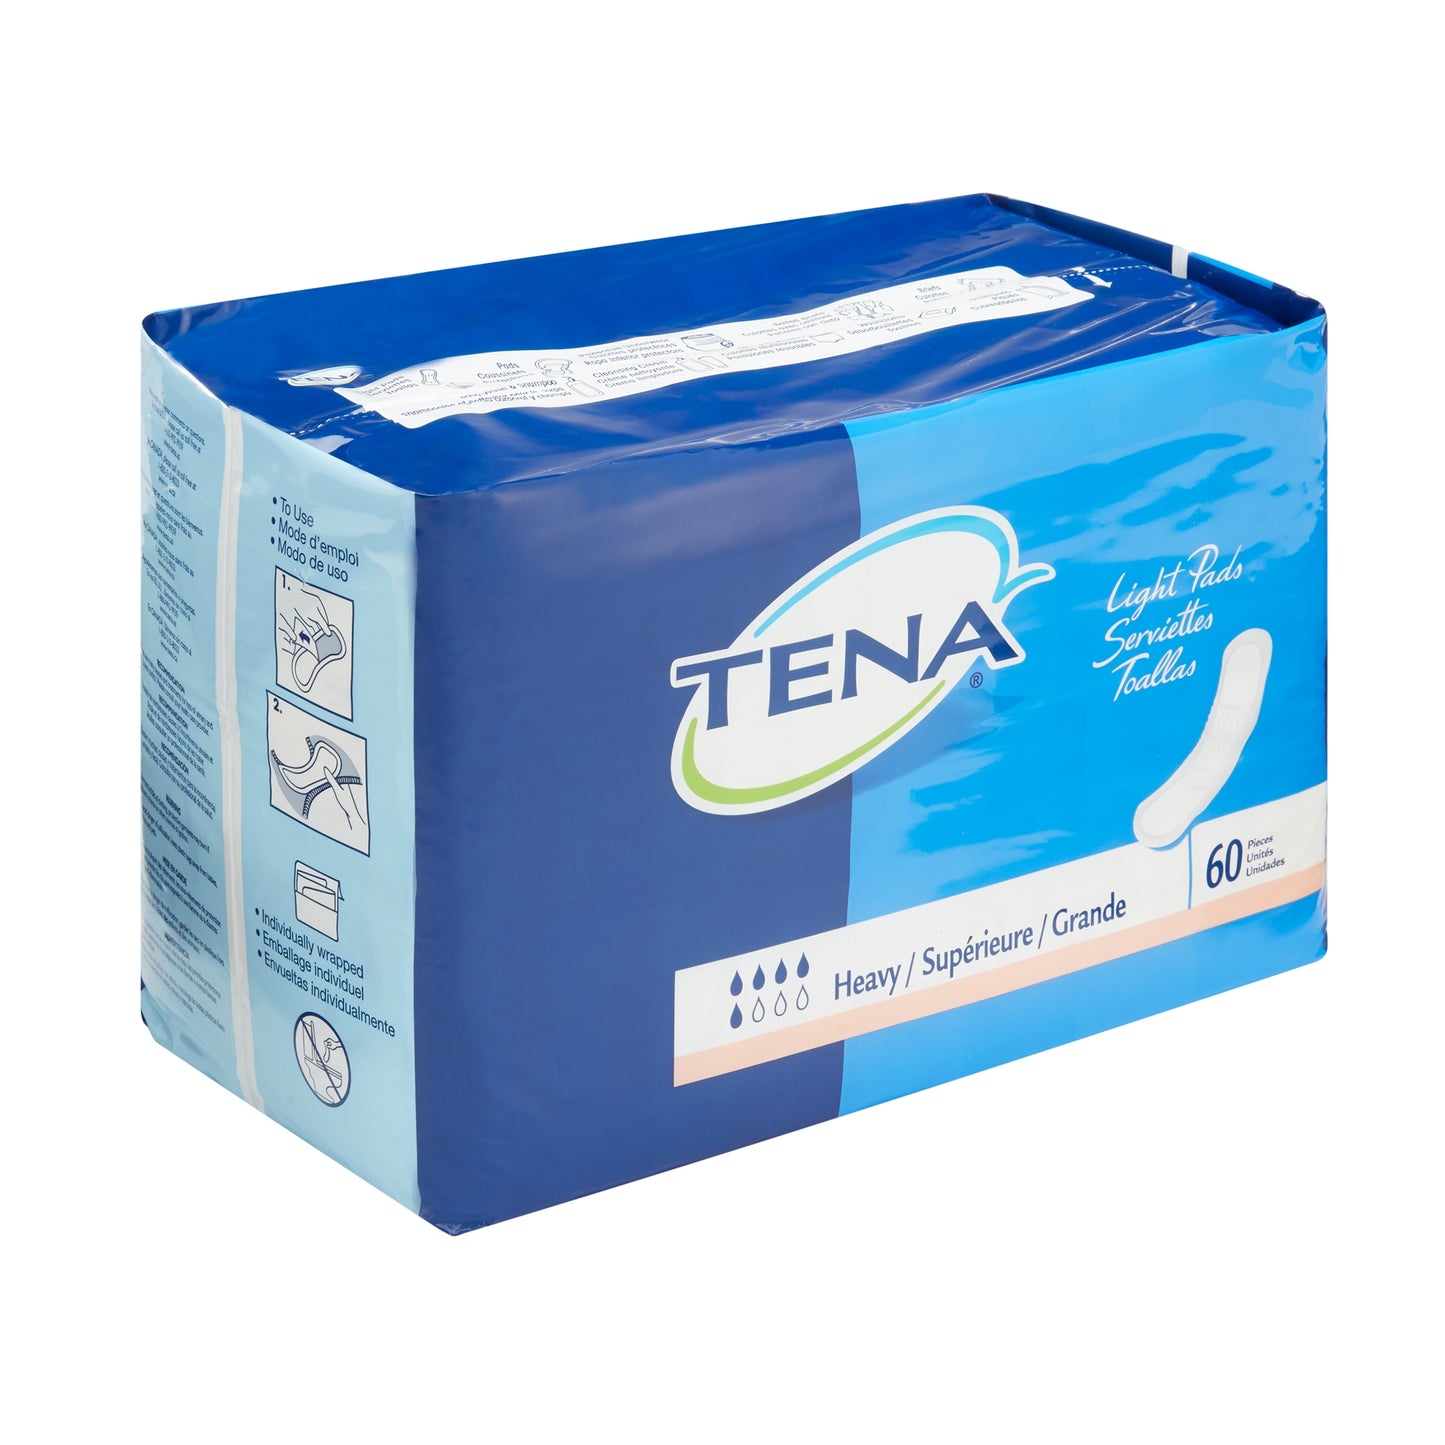 TENA Bladder Control Pads, Heavy Absorbency - 41509